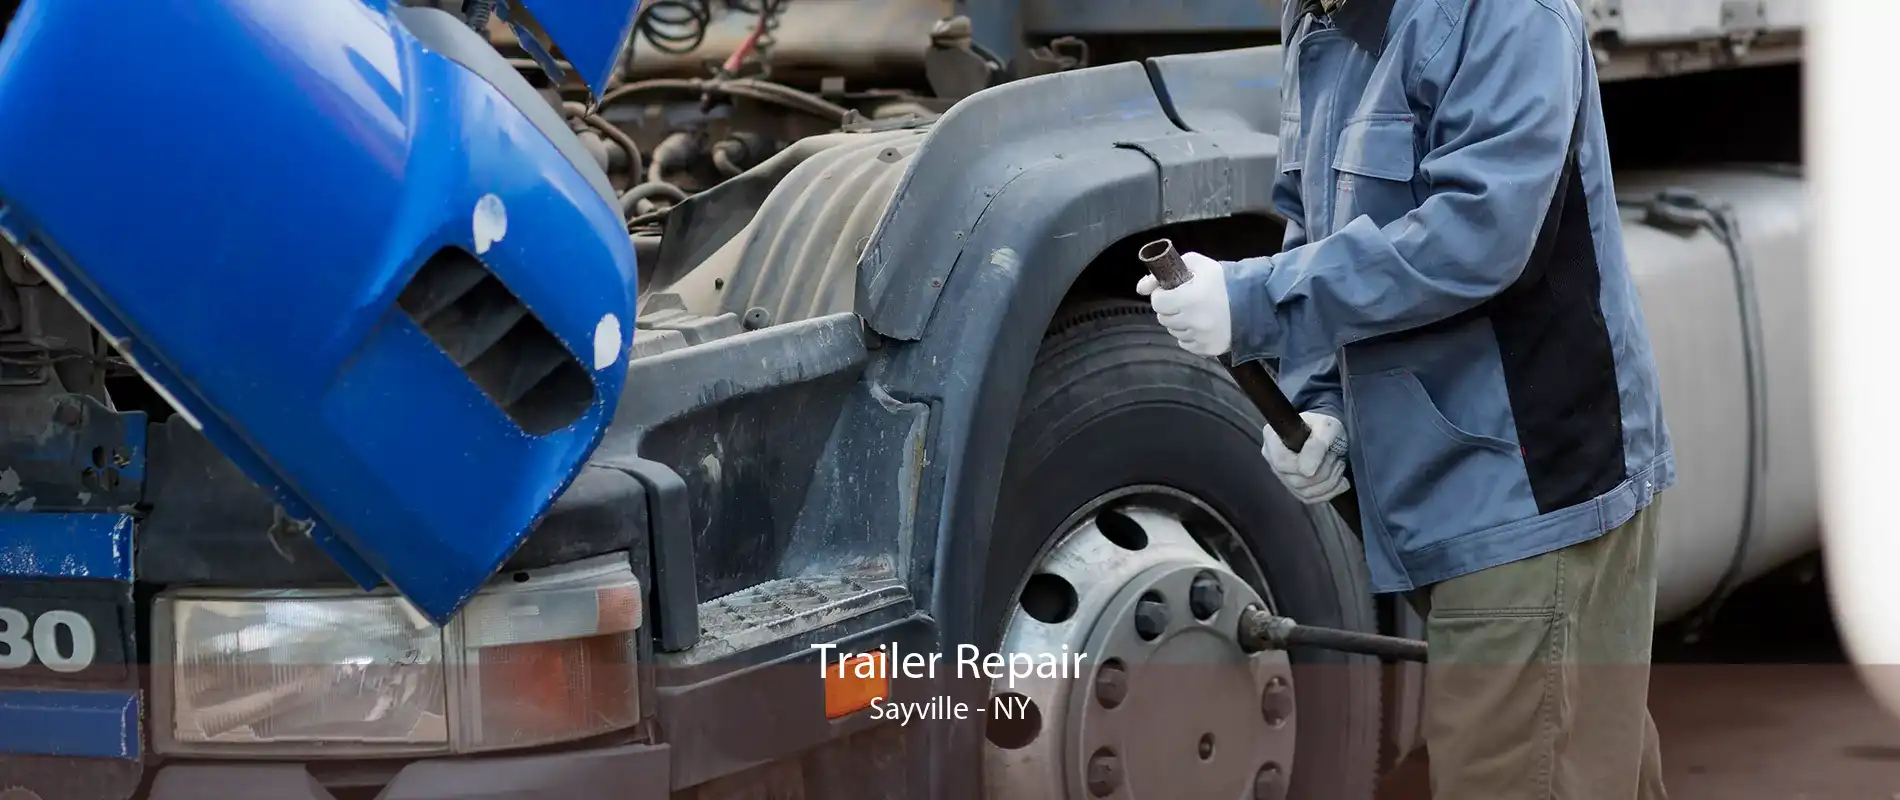 Trailer Repair Sayville - NY